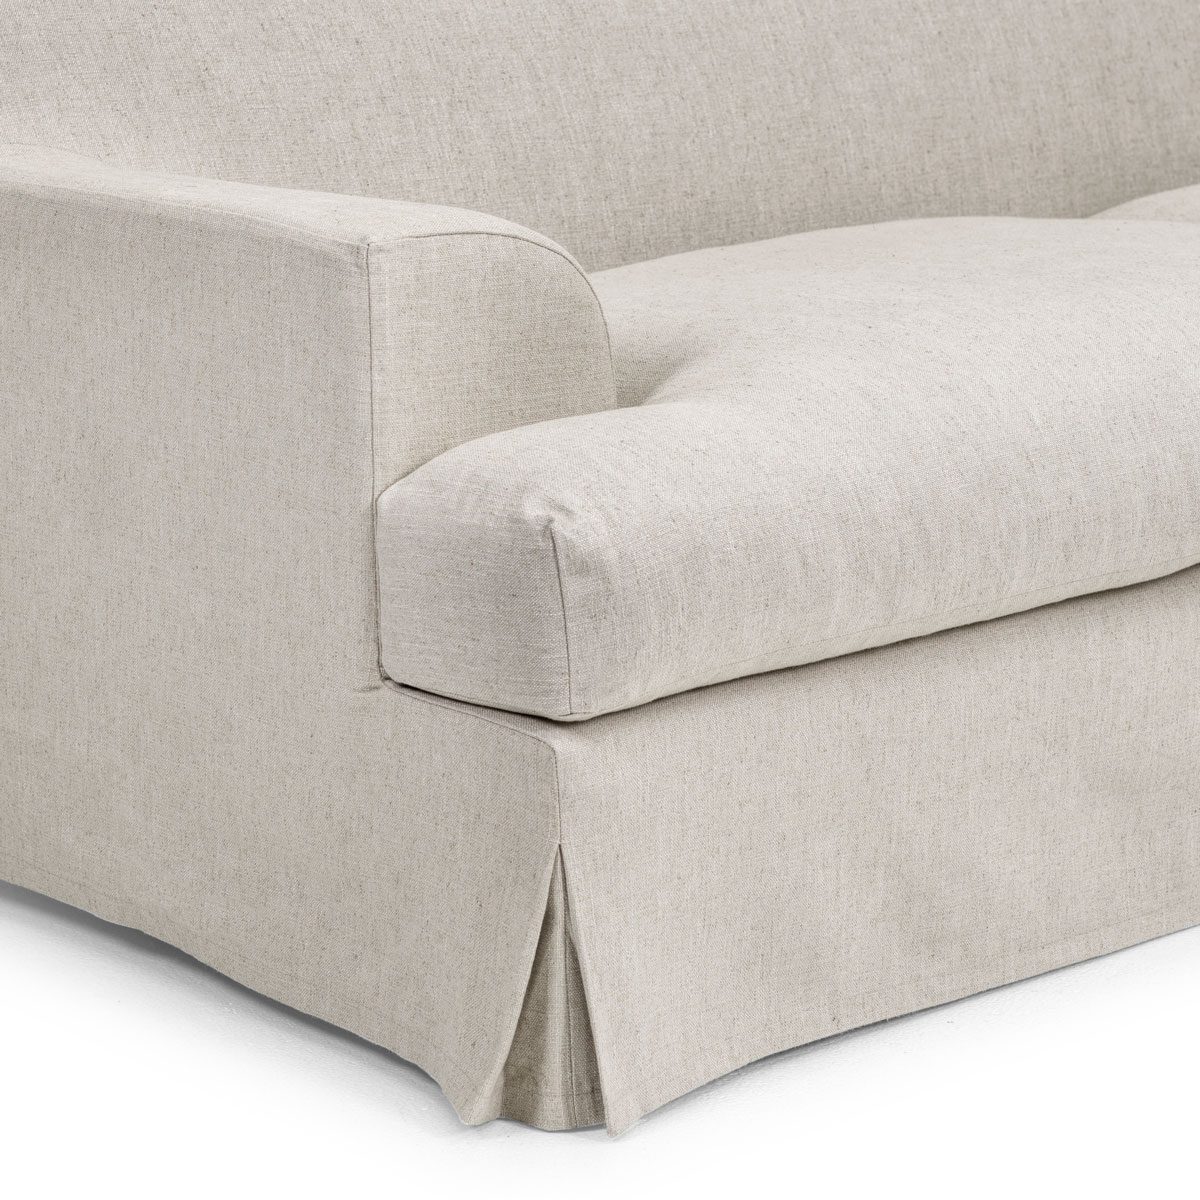 Cover Frances 3-Seat Sofa Off White